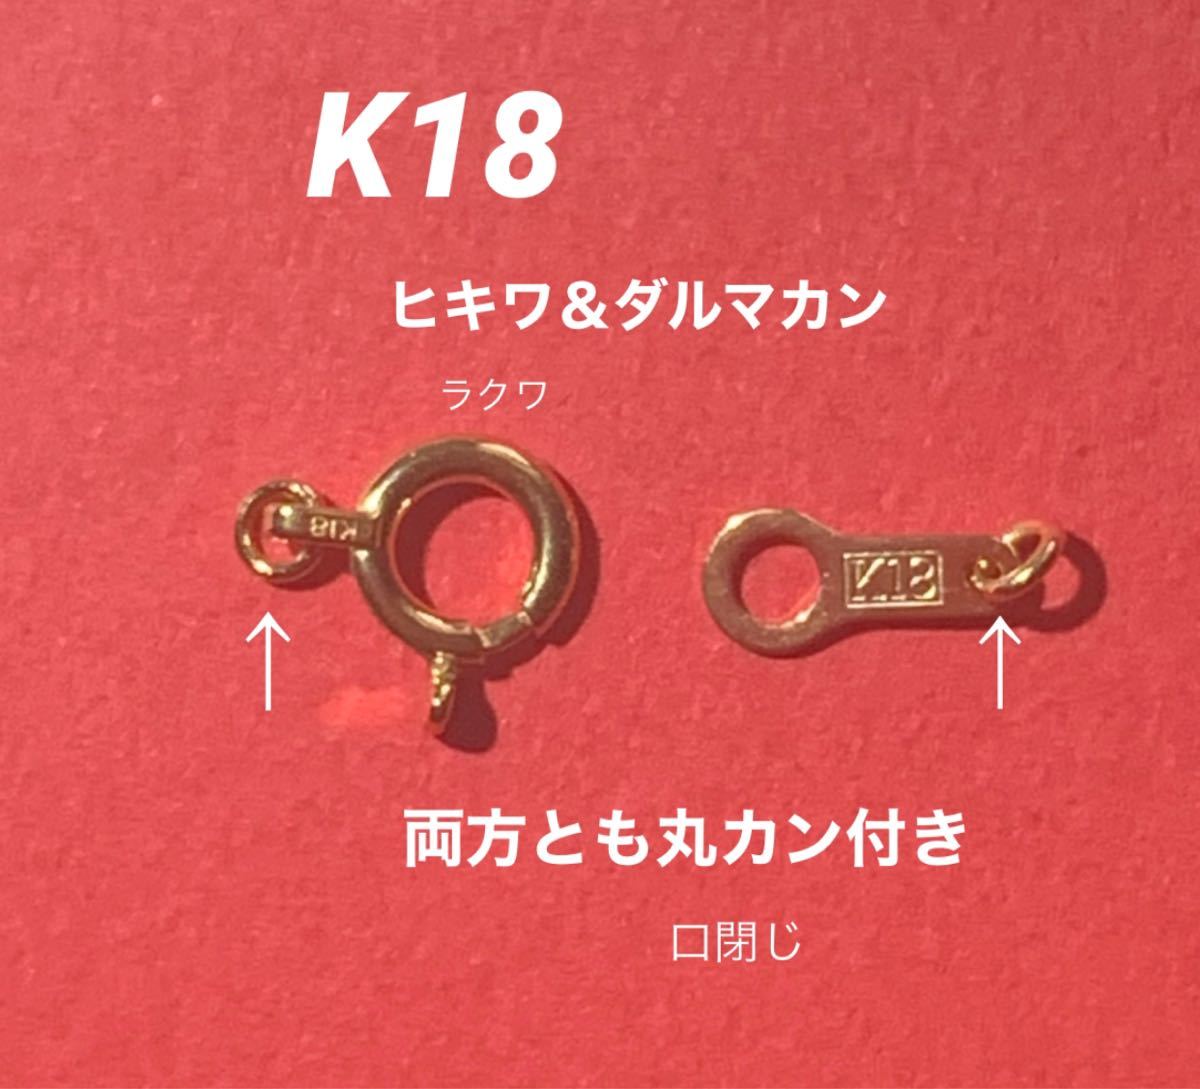 K18(18金)ヒキワ&ダルマカン(丸カン付き)セット お買い得 扱いやすい